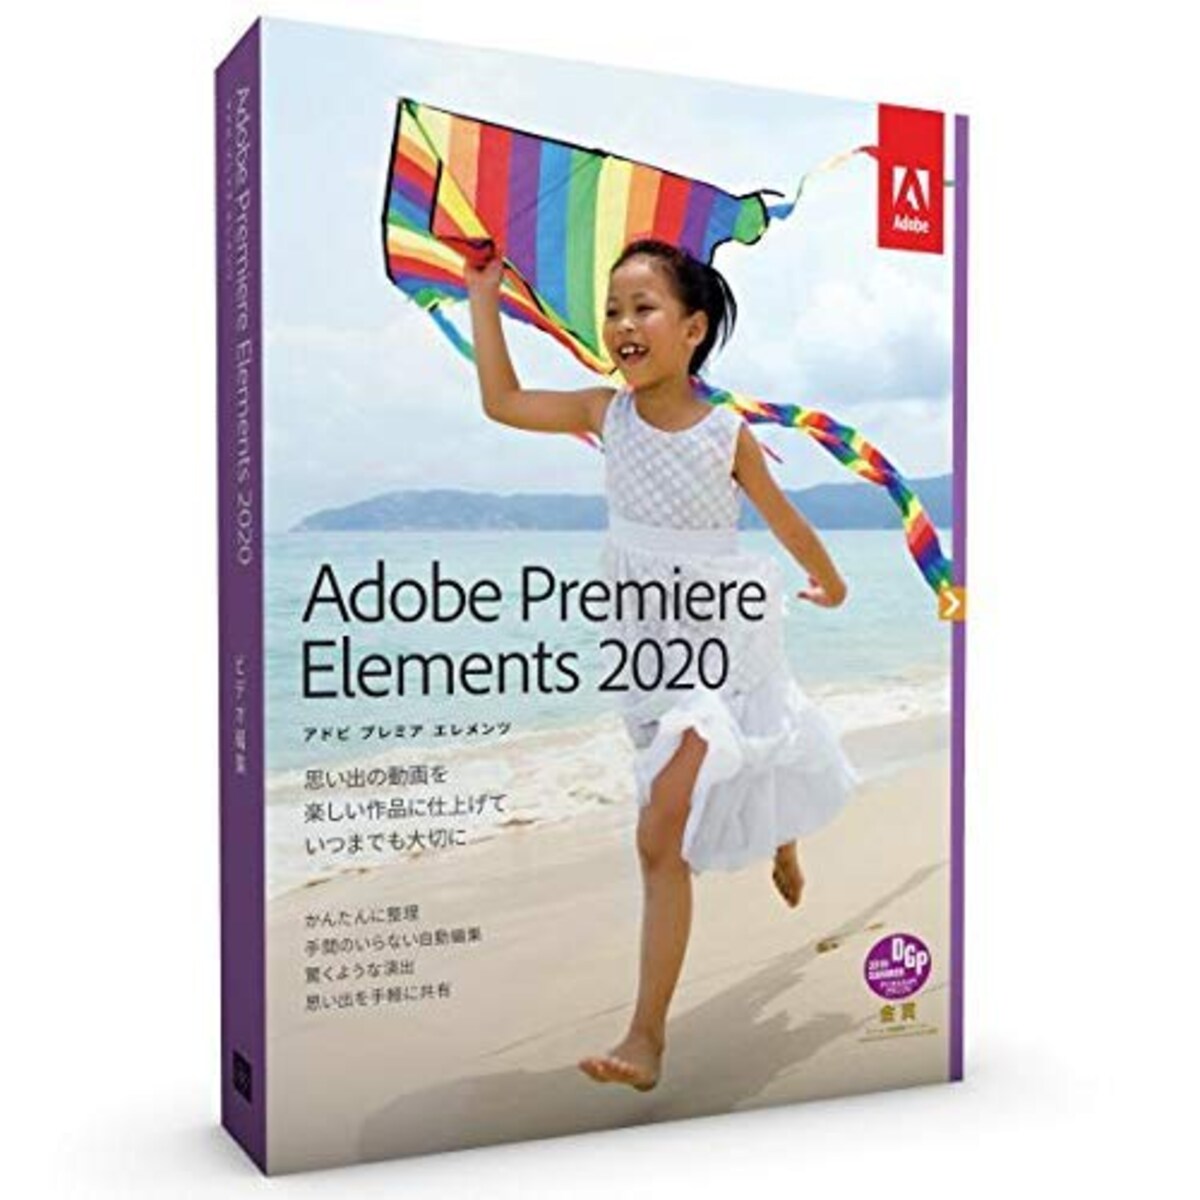  Adobe Premiere Elements 2020 パッケージ版 Windows/Mac対応画像2 